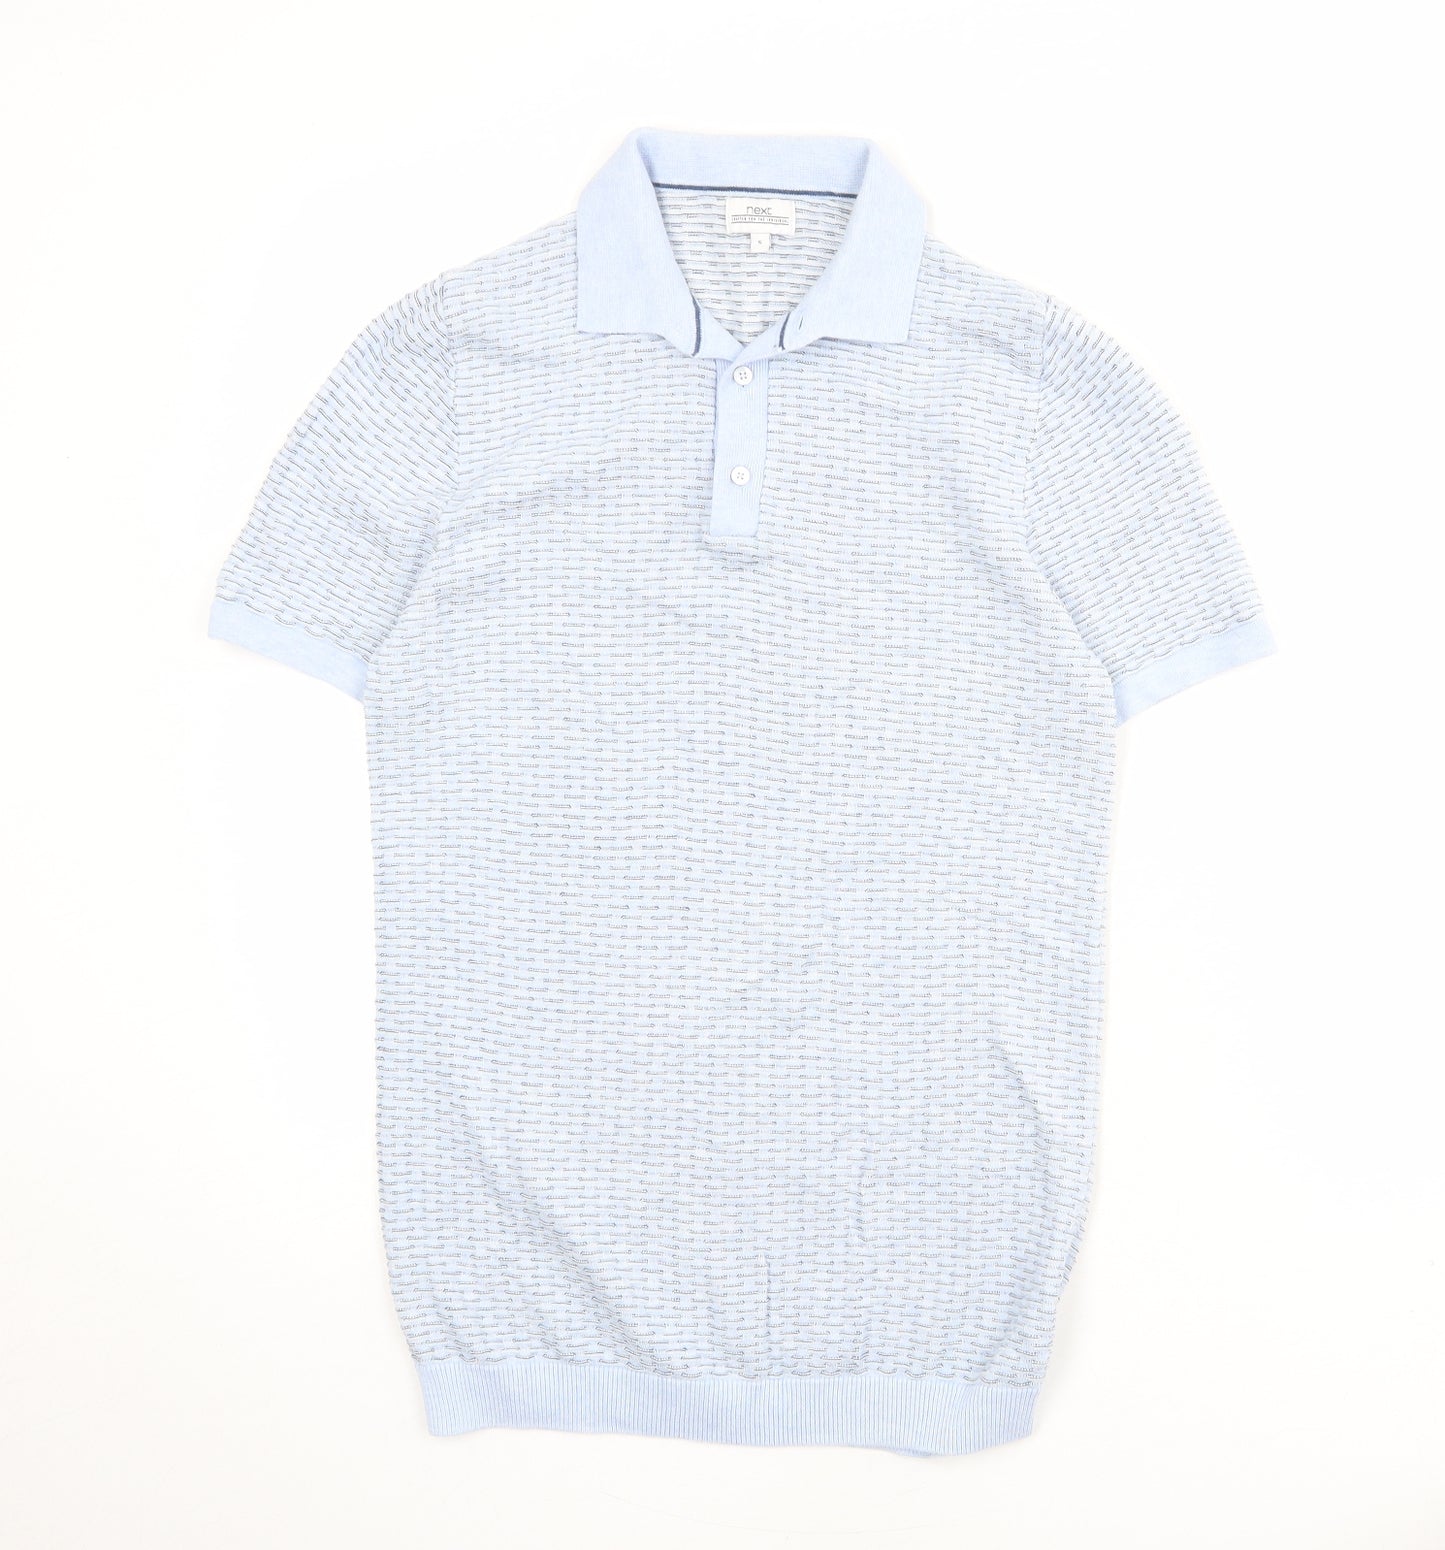 NEXT Mens Blue Geometric 100% Cotton Polo Size S Collared Button